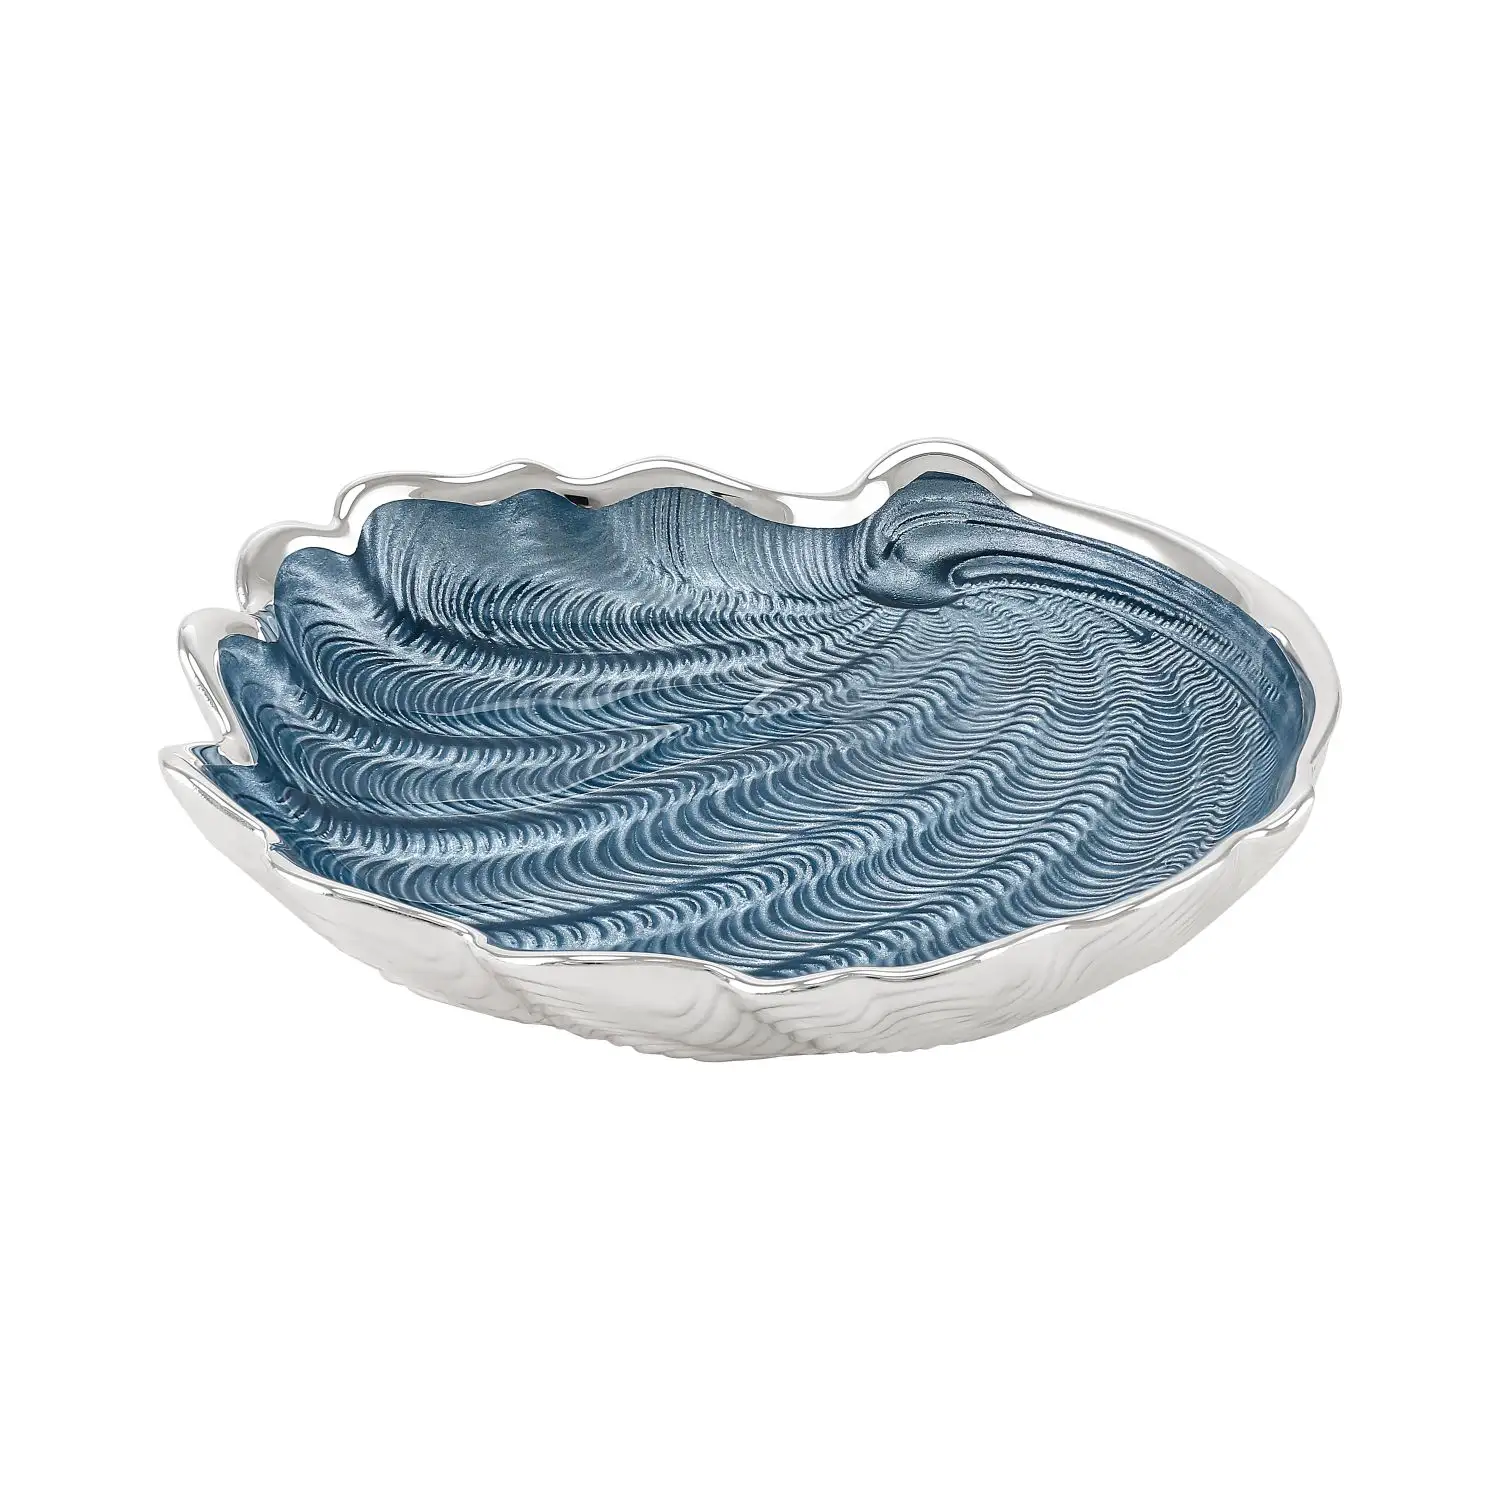 Тарелка стеклянная CONCHIGLIA (цвет небесно-голубой) диаметр 15 см тарелка стеклянная conchiglia цвет небесно голубой диаметр 15 см